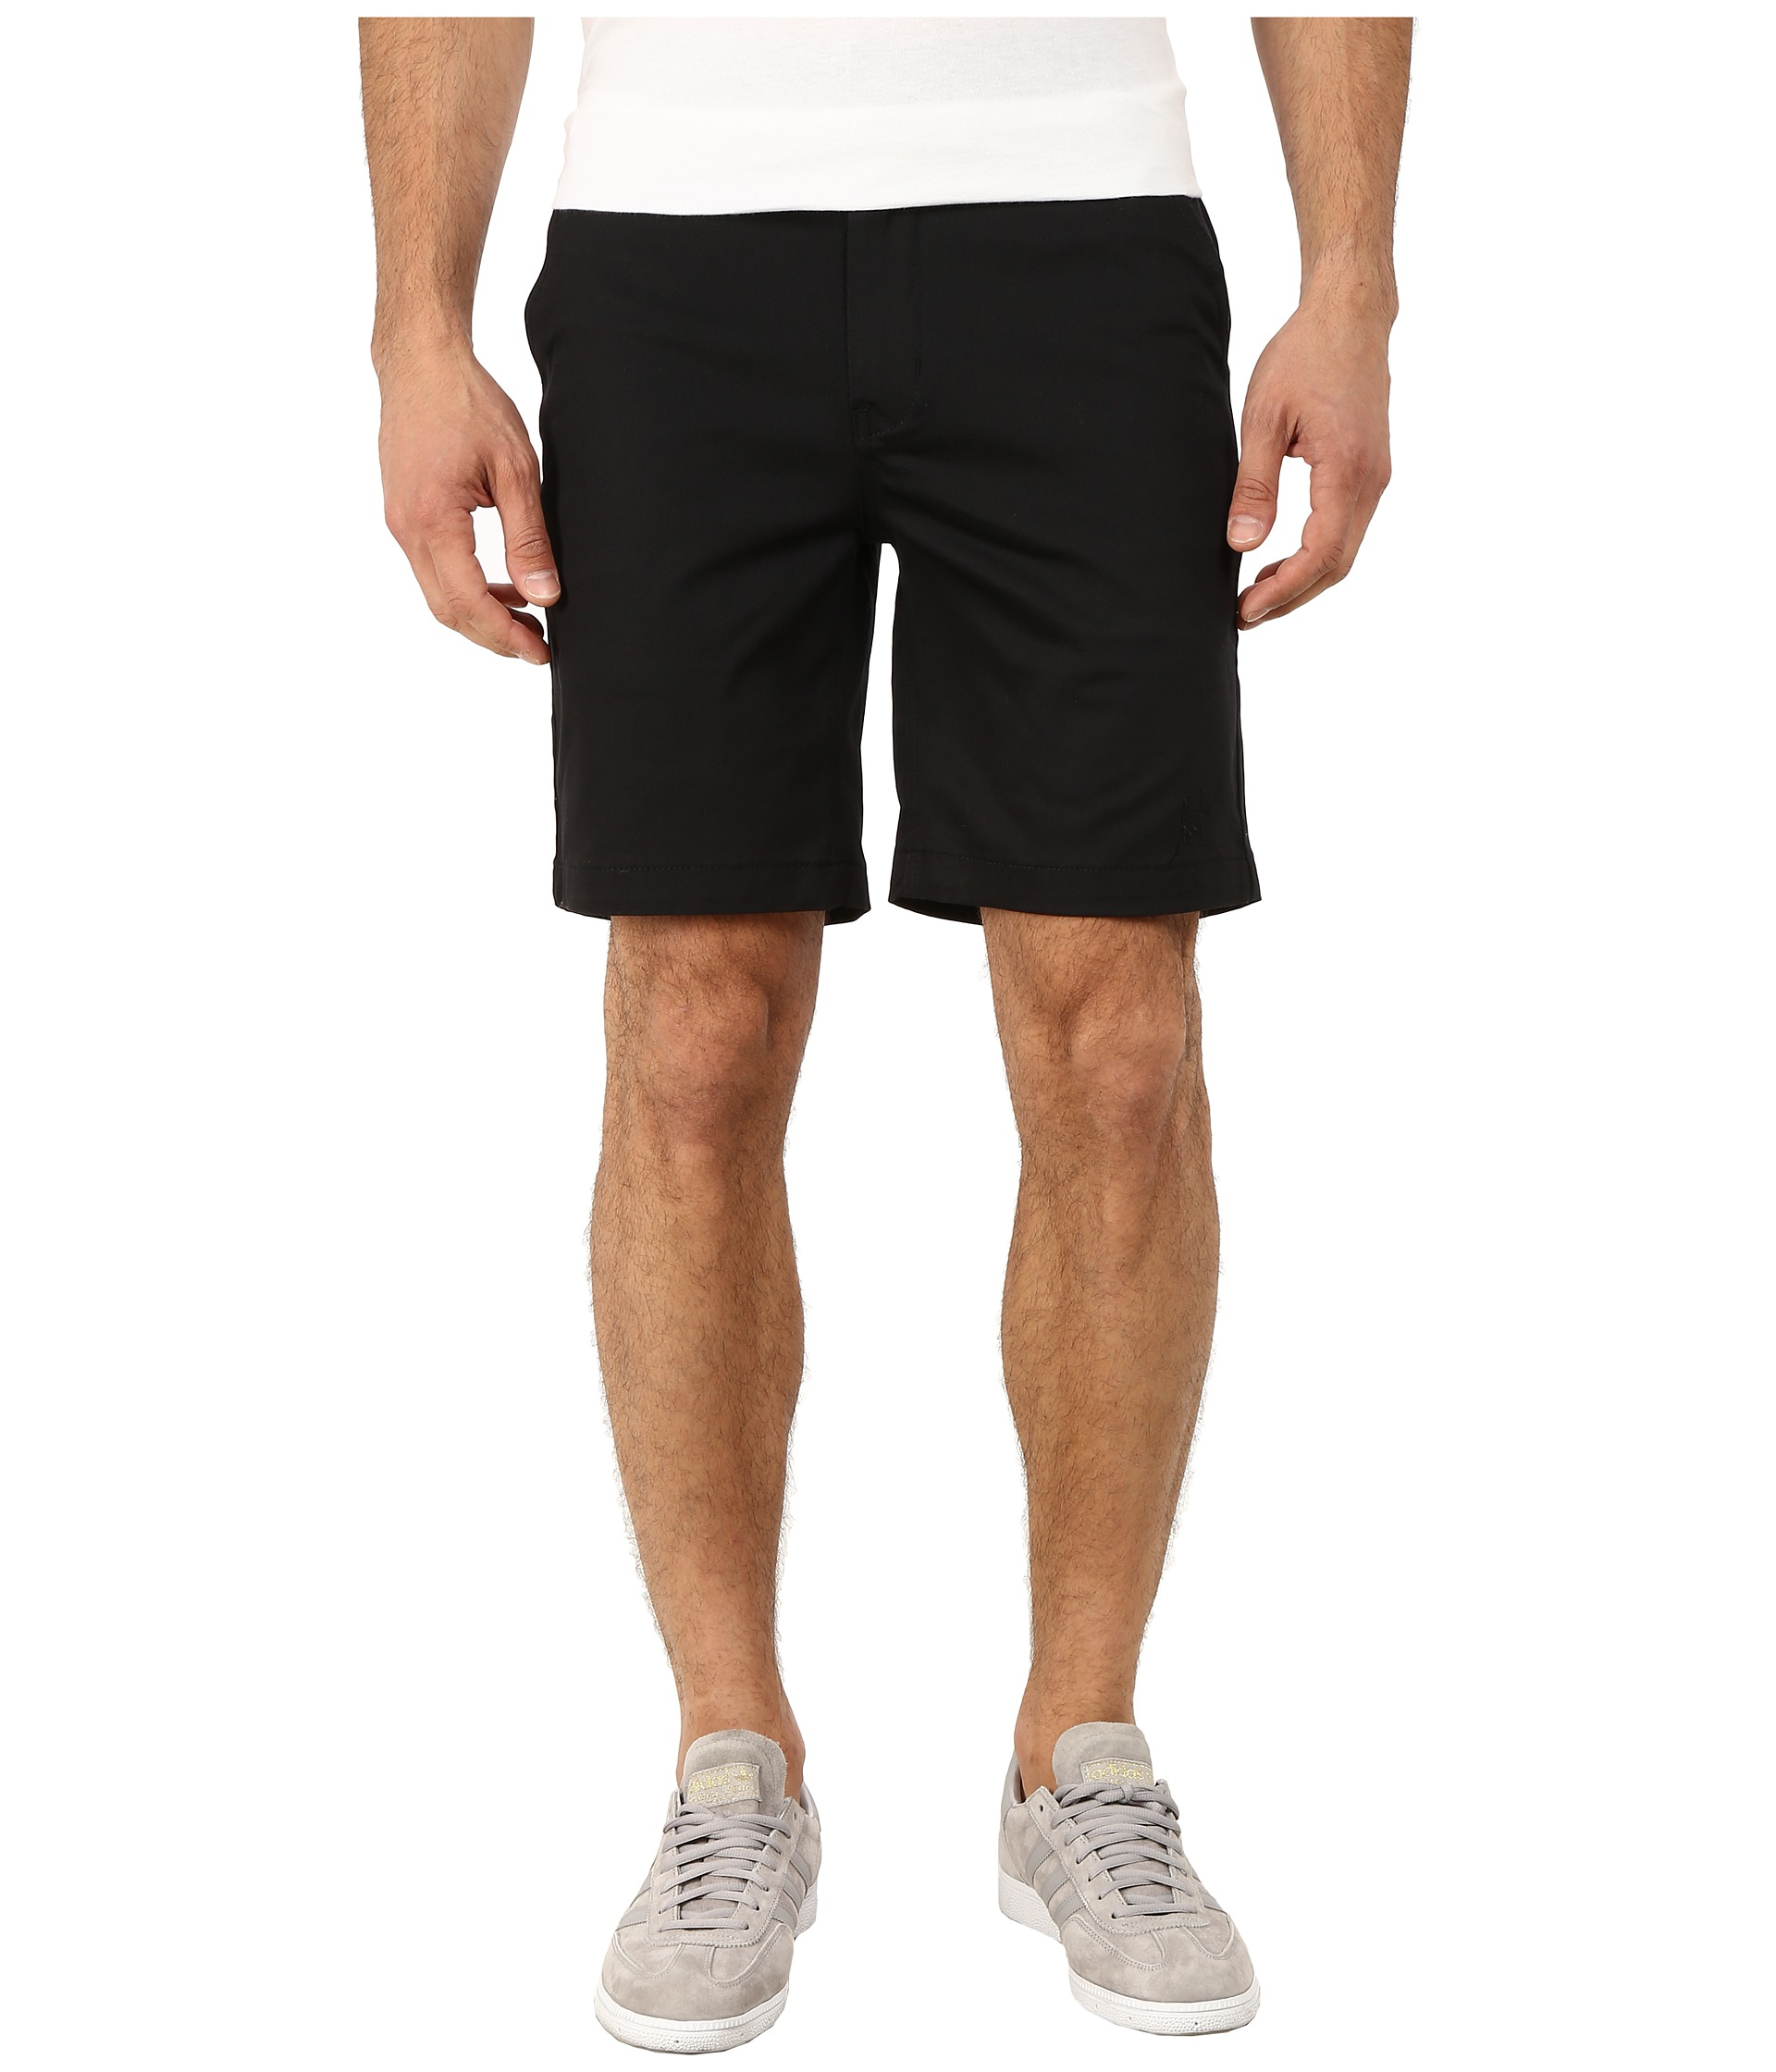 Lyst - Huf Fulton Chino Shorts in Black for Men